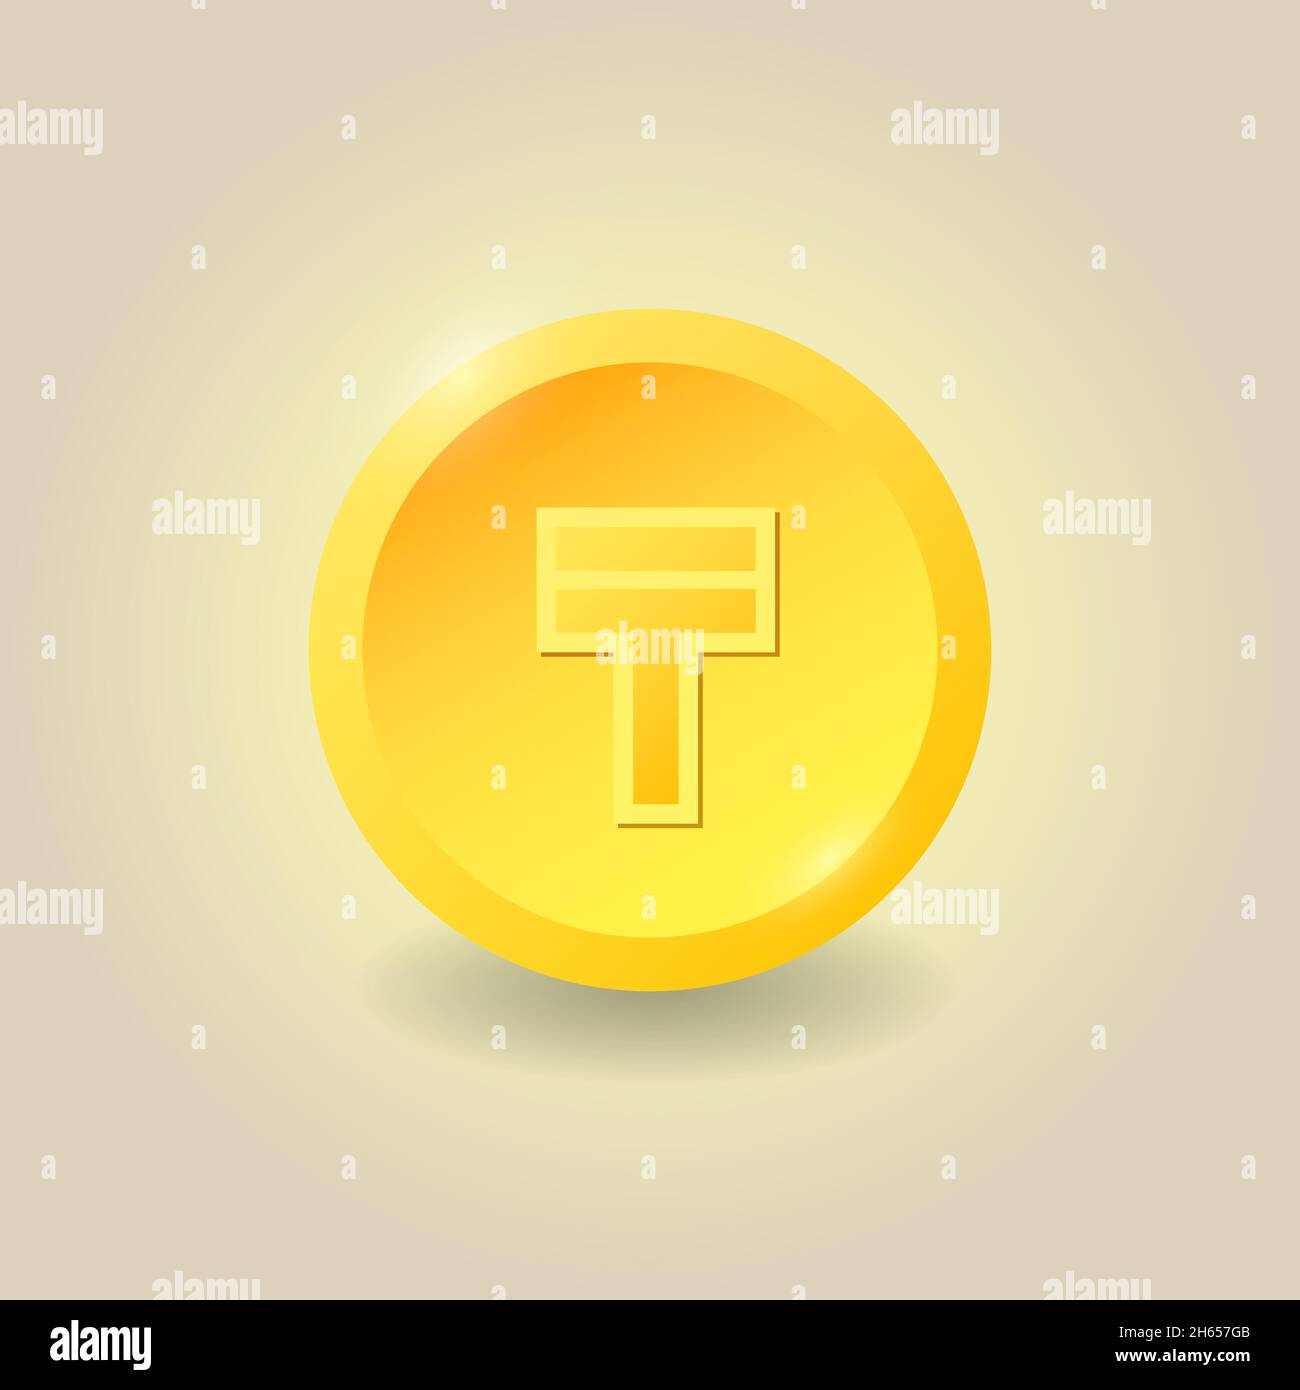 Golden Kazakhstani Tenge coin. Finance banking concept. Vector clipart illustration for websites, web design, mobile app, infographics. Stock Vector